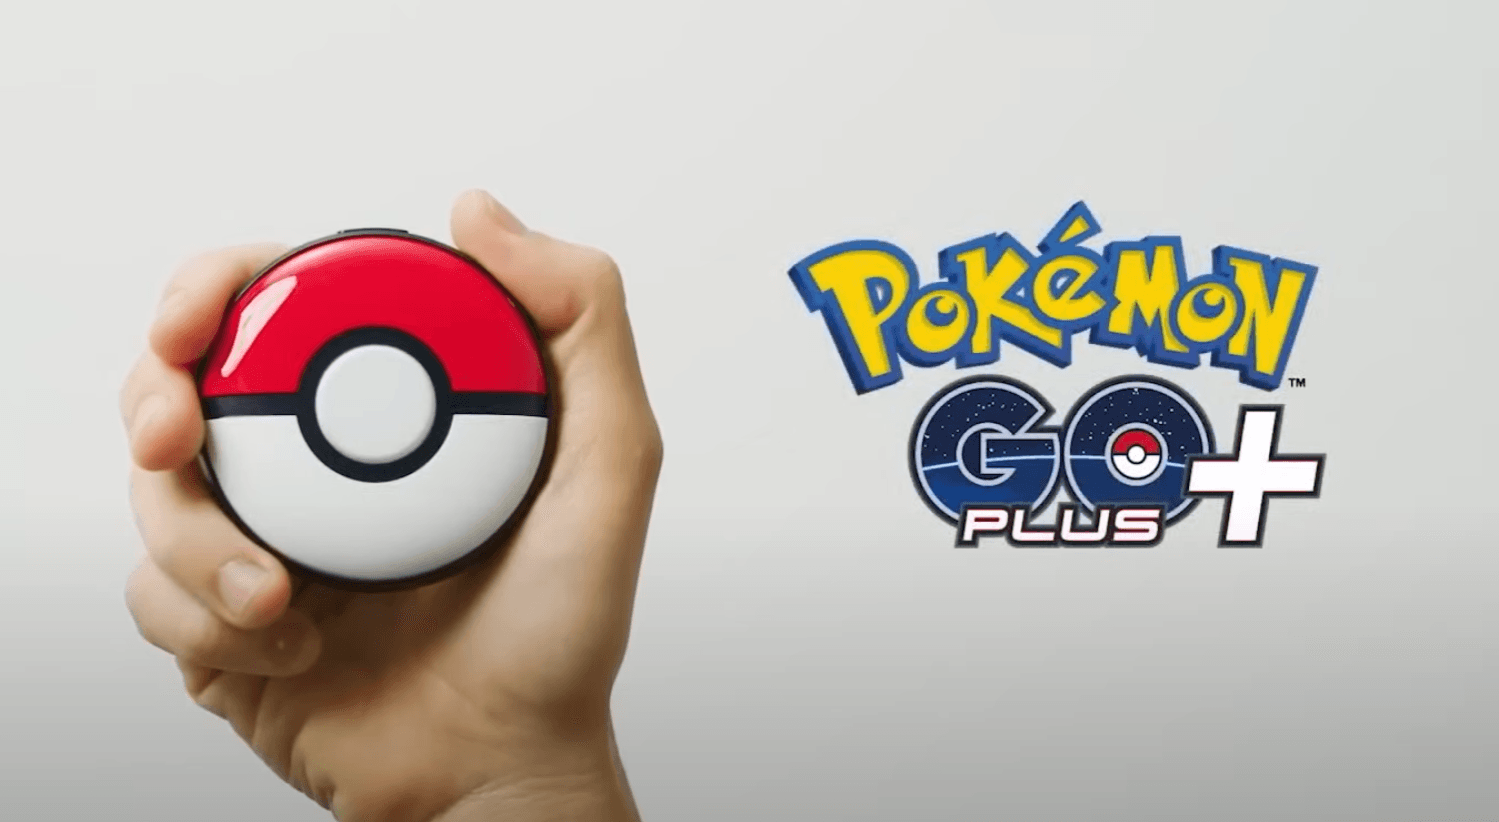 The Pokémon GO plus plus item with the new logo next to it